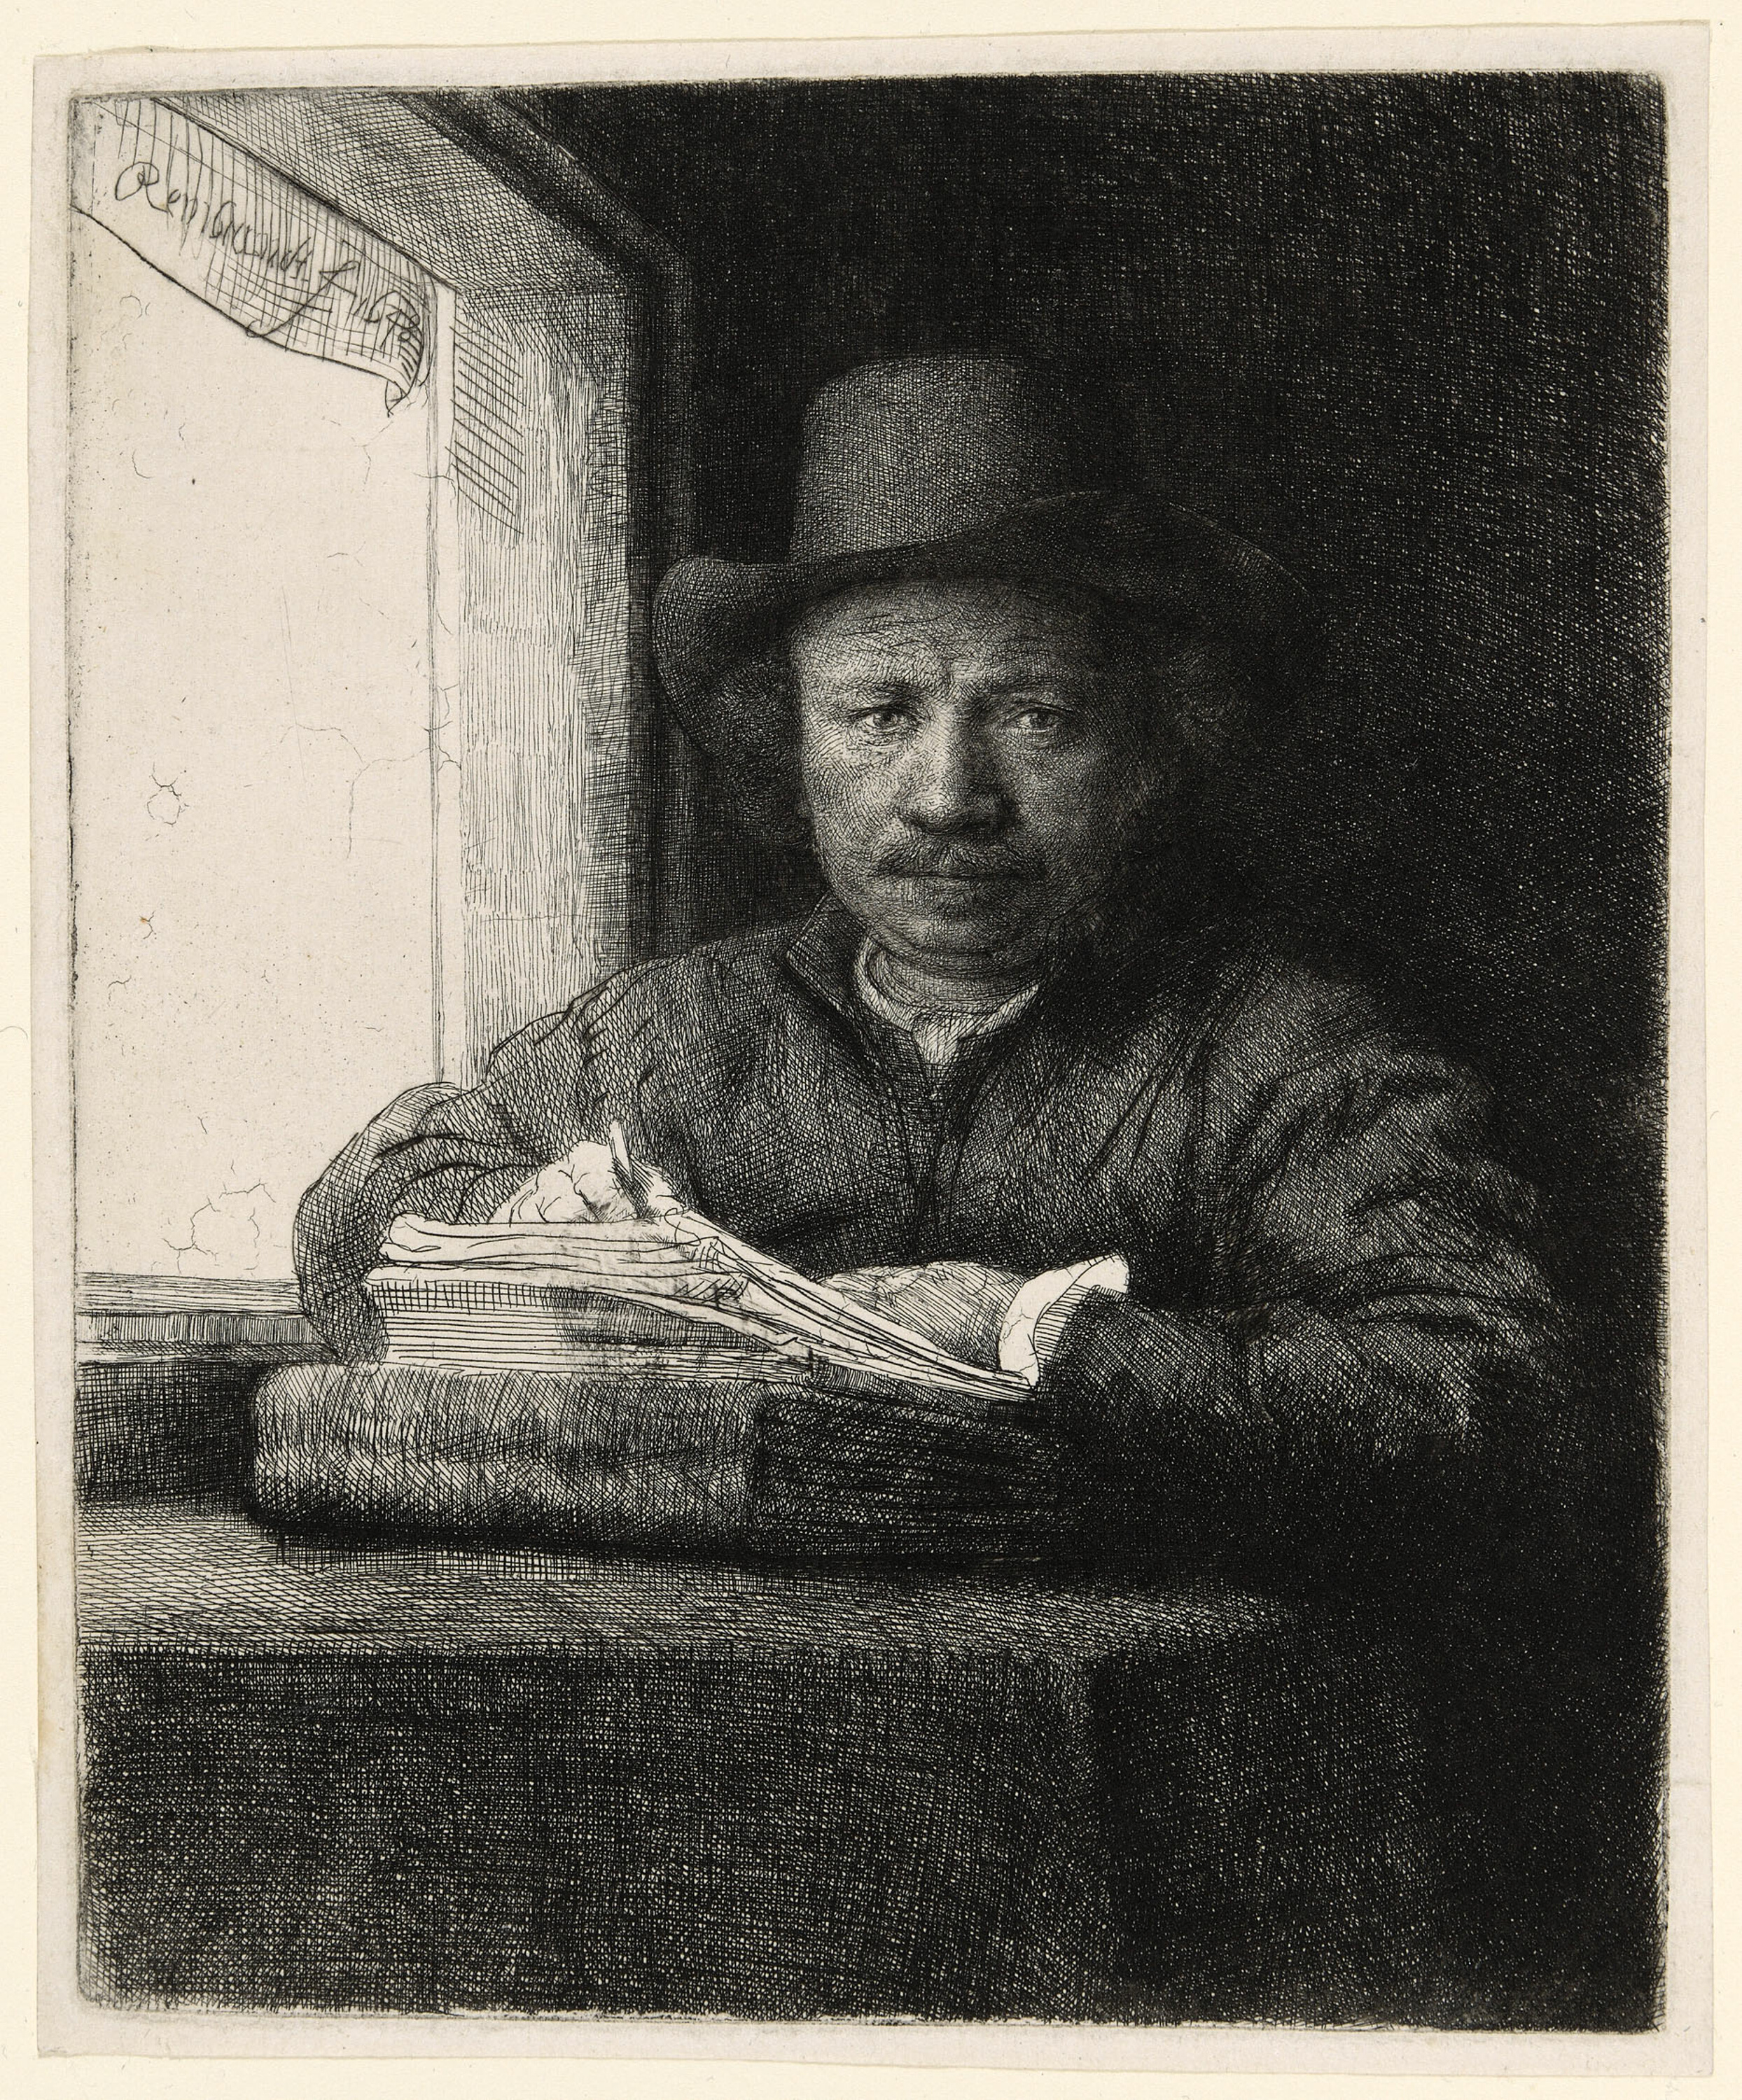 Rembrandt van Rijn’s “Self-Portrait Etching at a Window,” 1648.